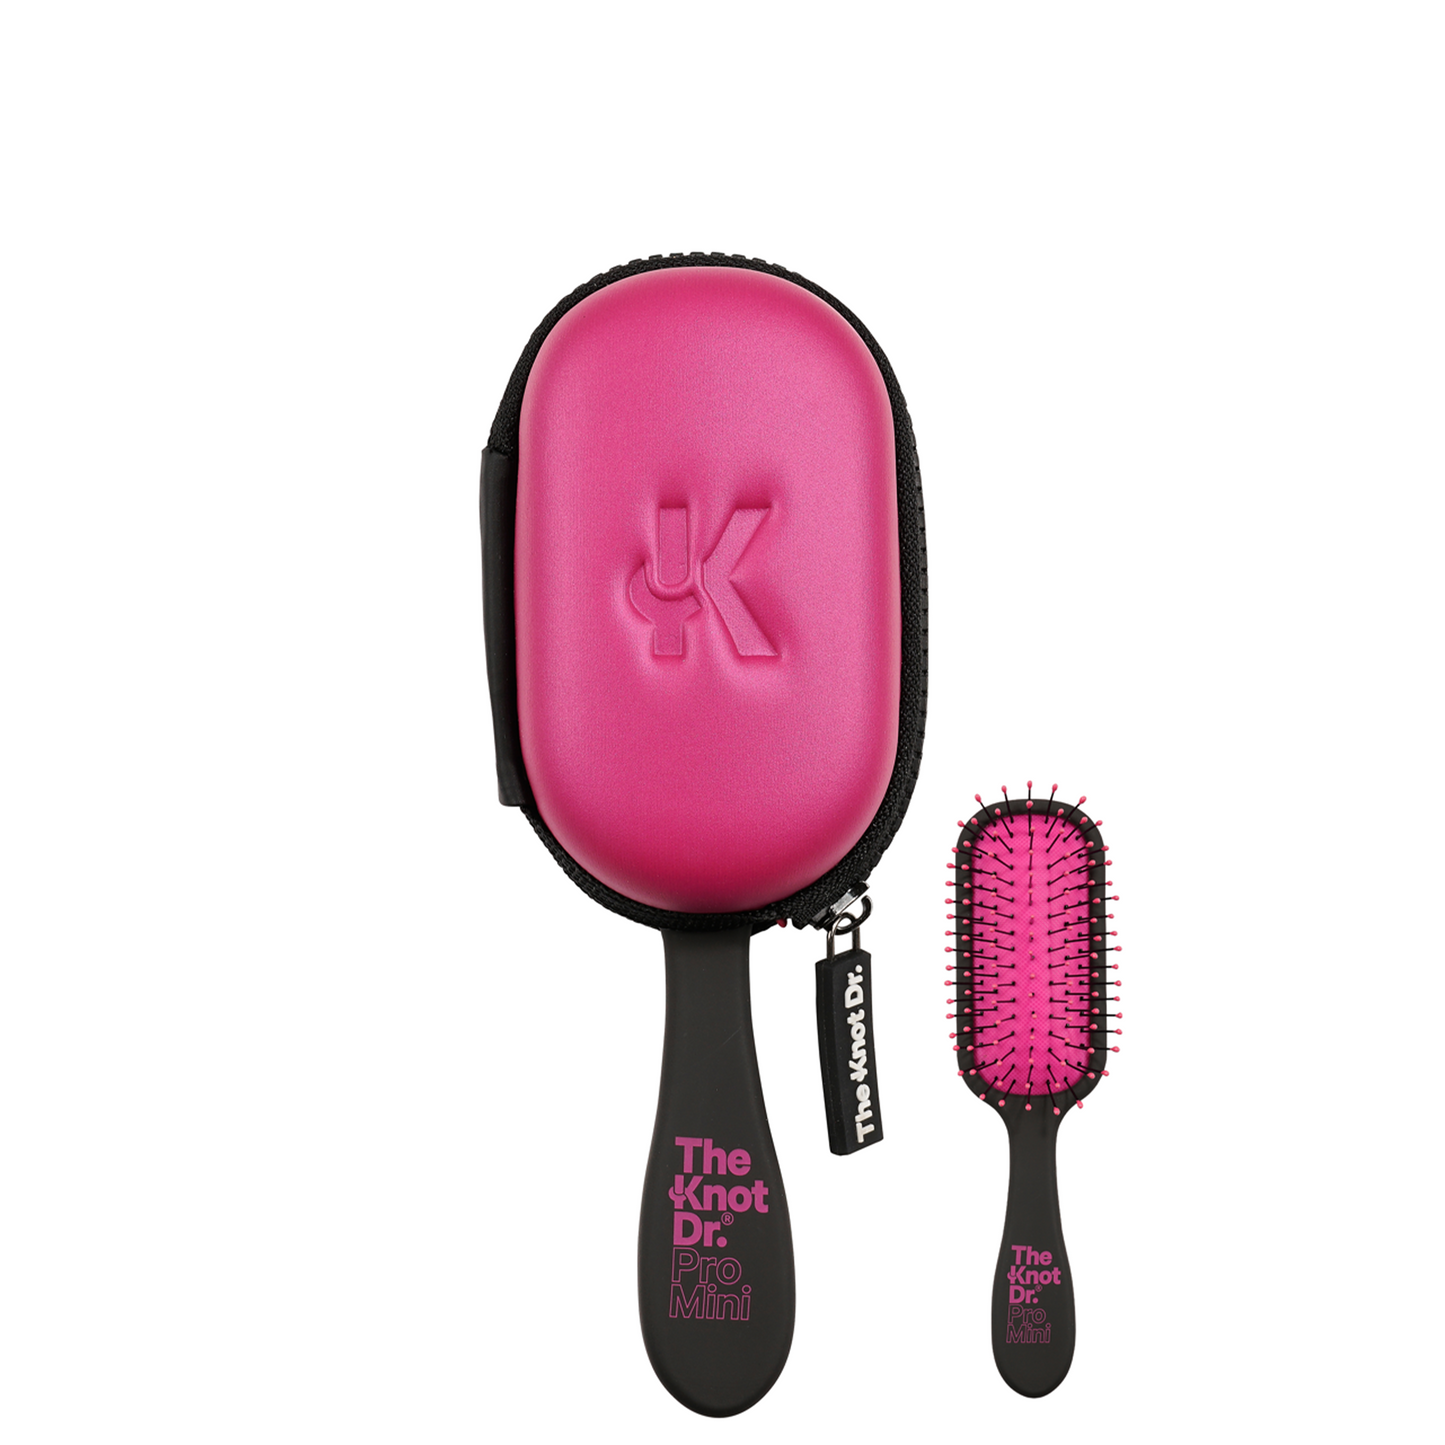 The Pink Pro Mini Hairbrush with Headcase